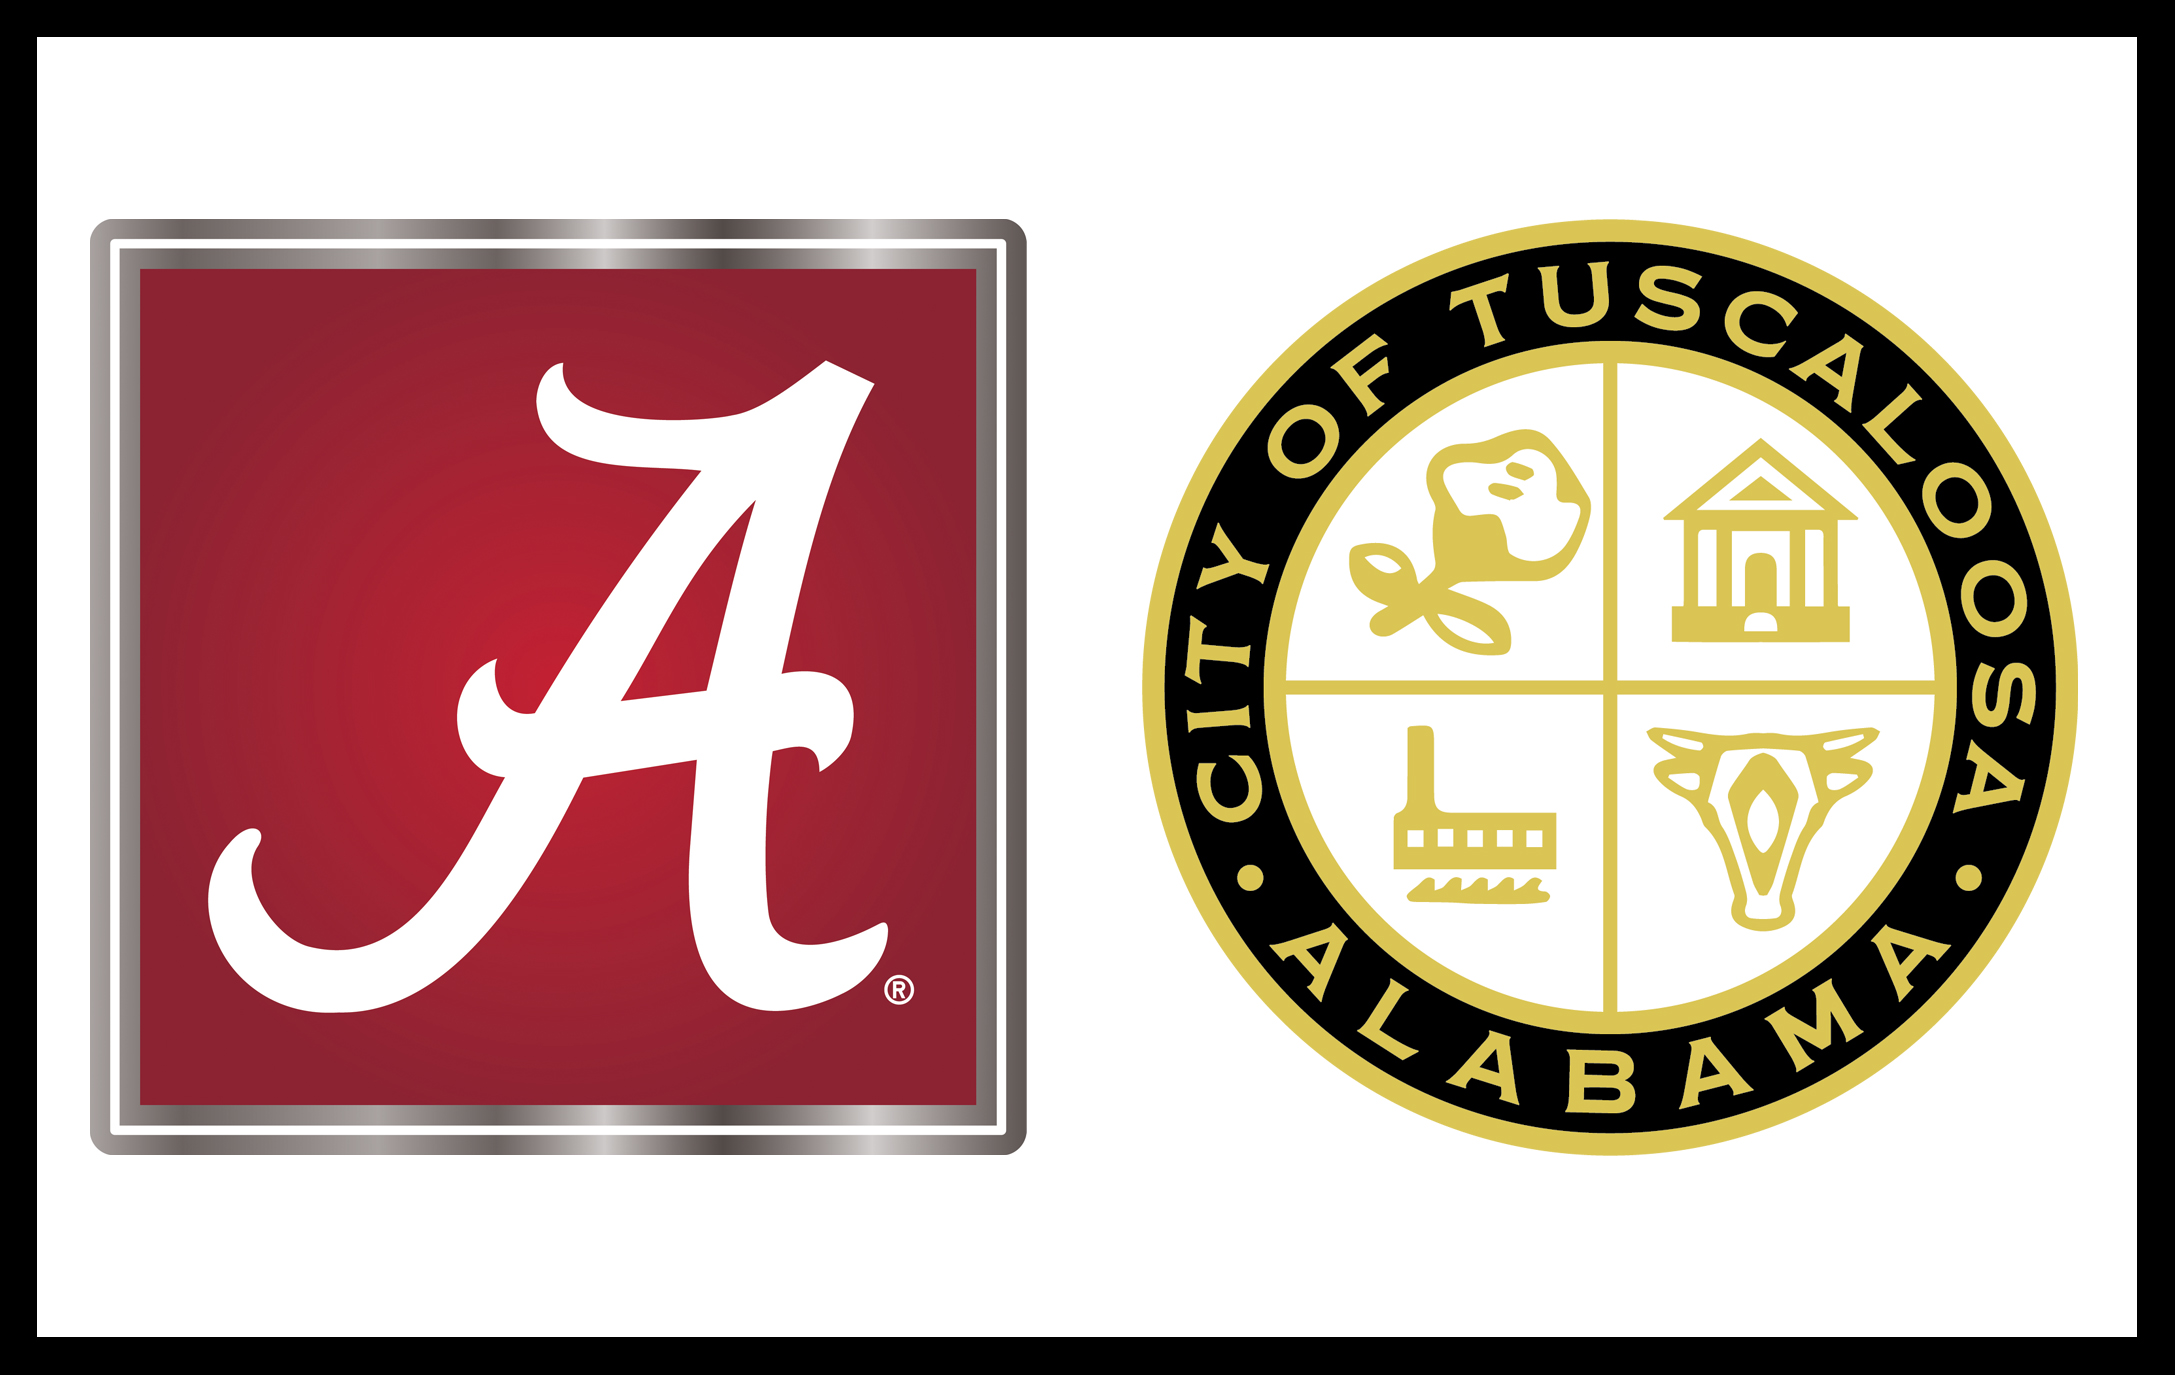 The University of Alabama and City of Tuscaloosa seals